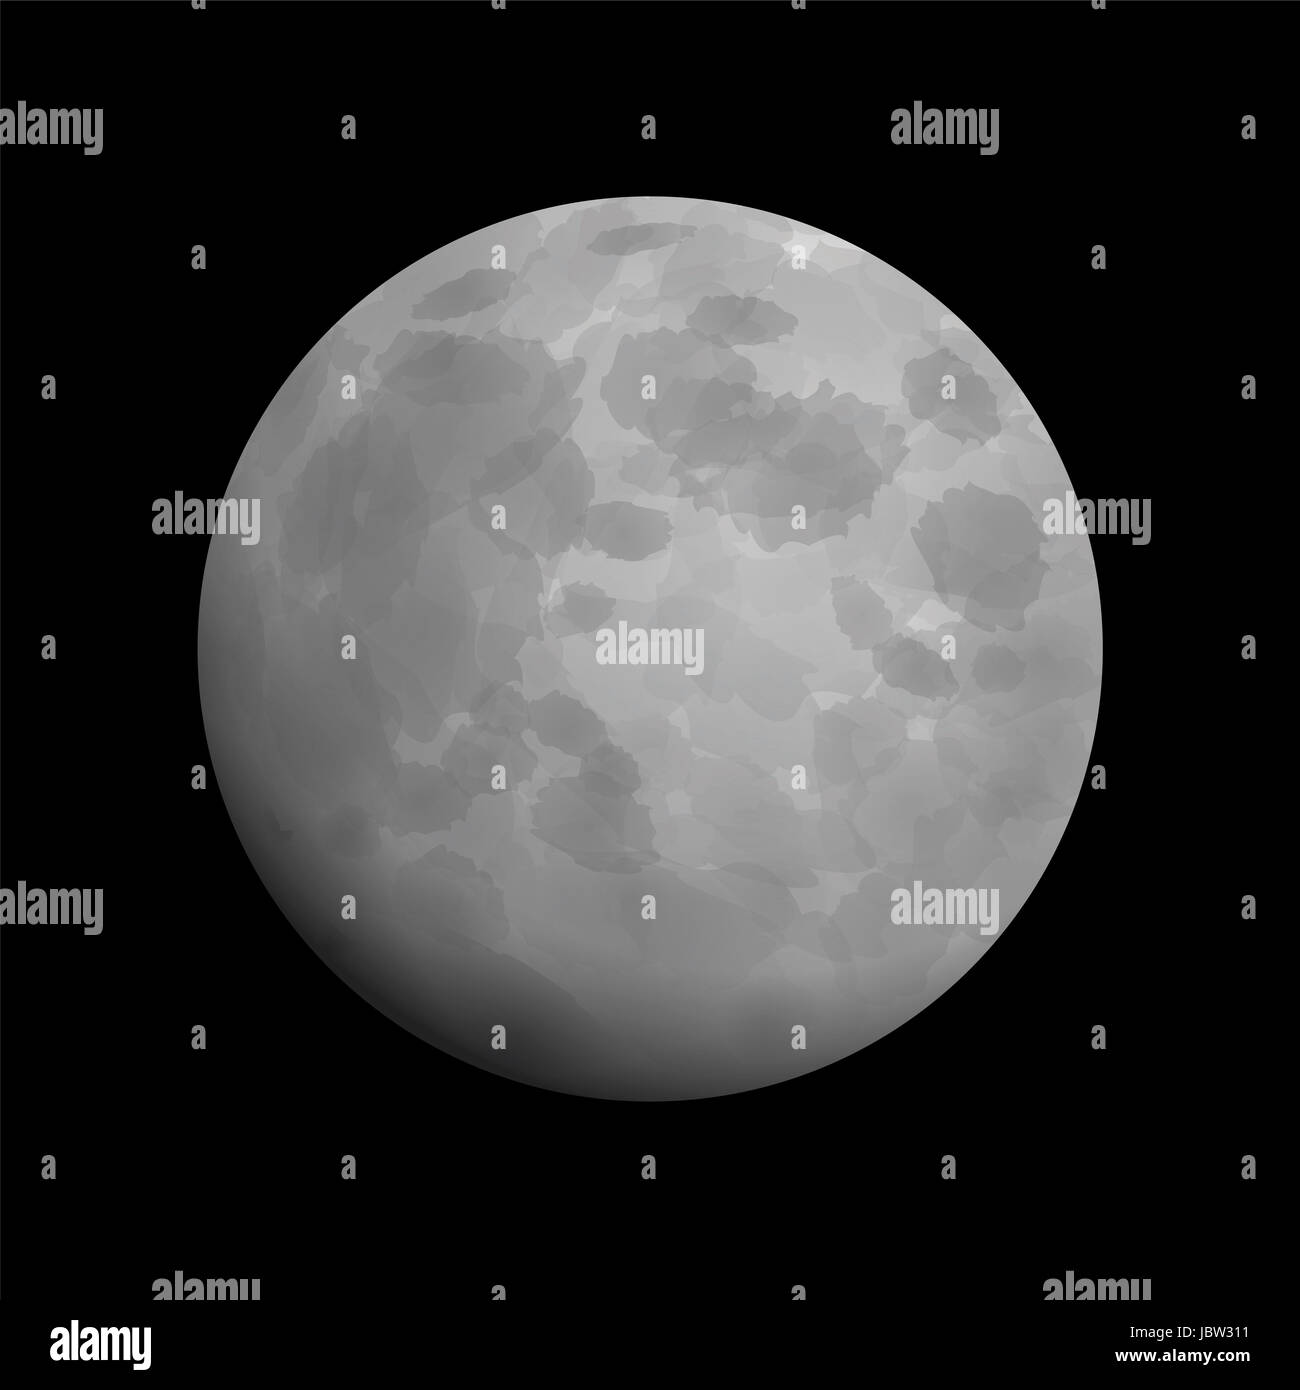 Moon - artistic illustration of full moon on black background. Stock Photo